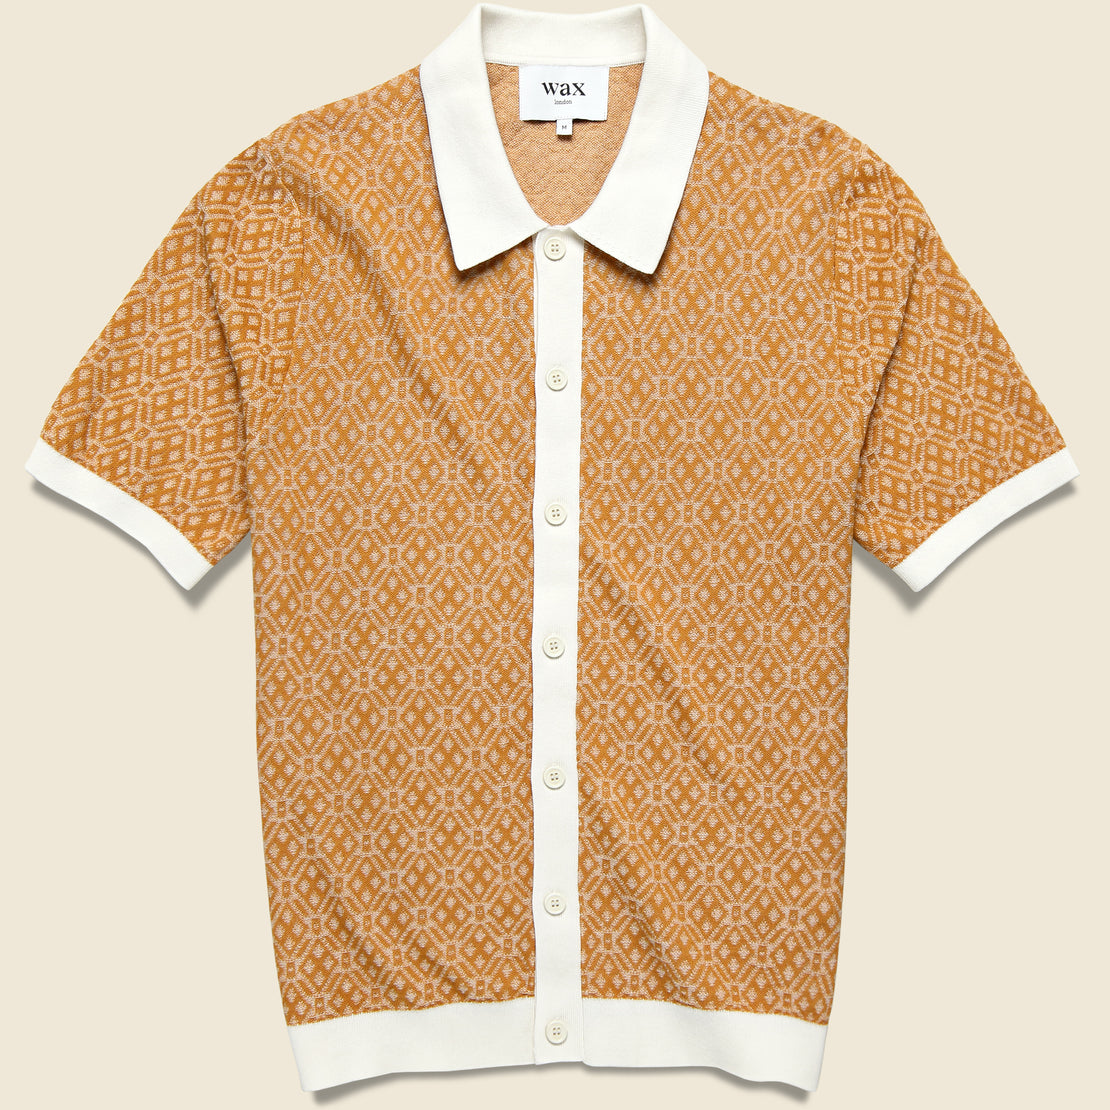 Wax London Tellaro Shirt - Tile Knit Mustard